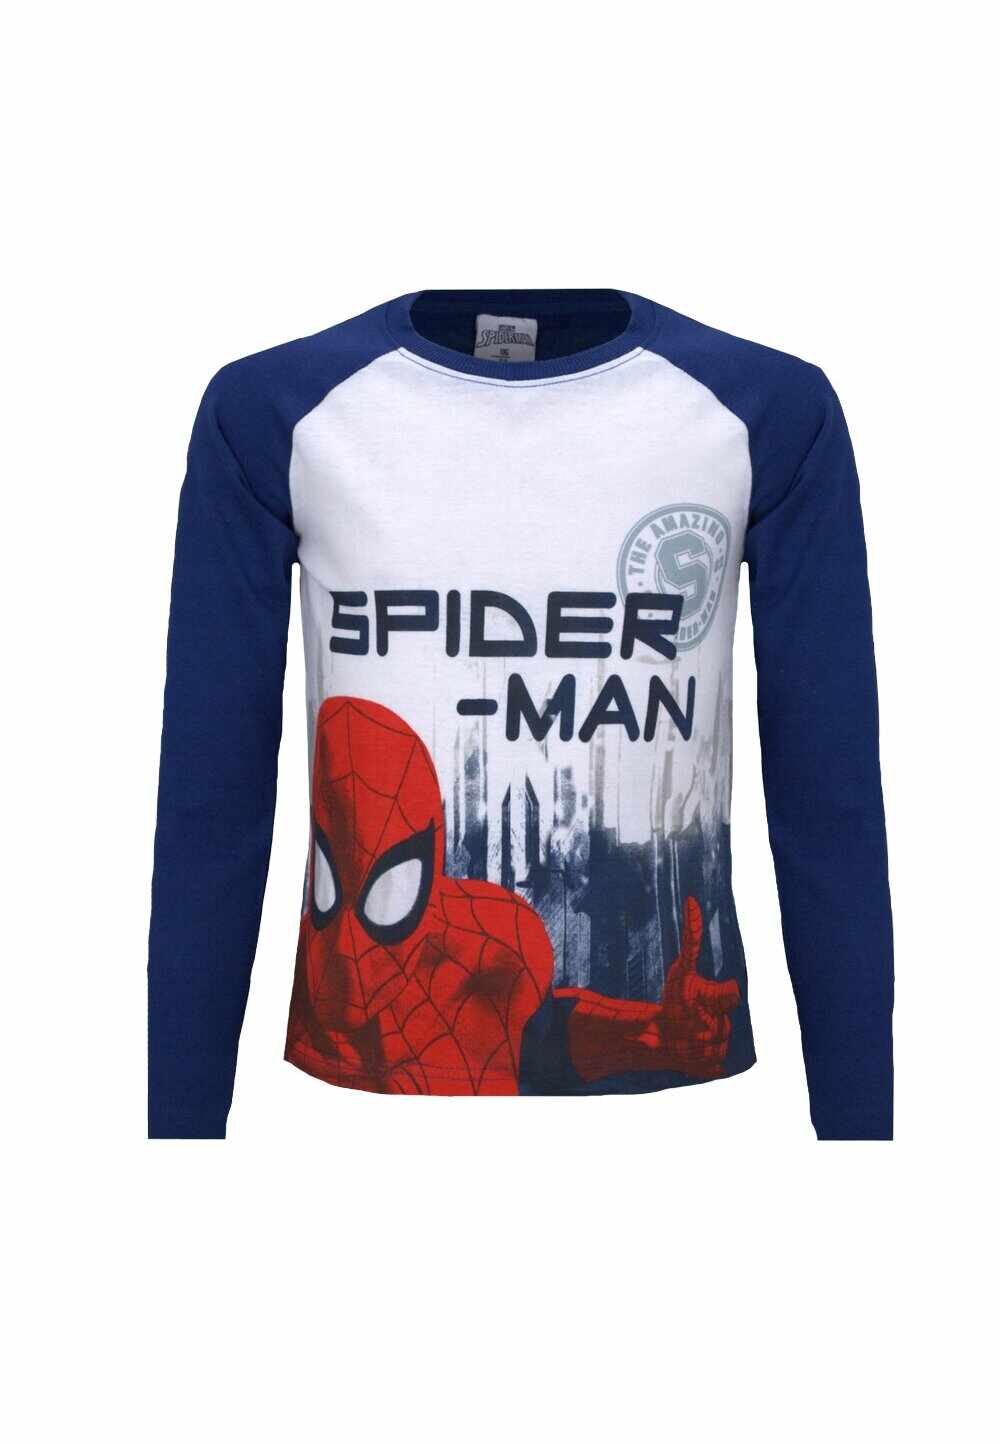 Bluza maneca lunga, bumbac, Spider Man, bluemarin